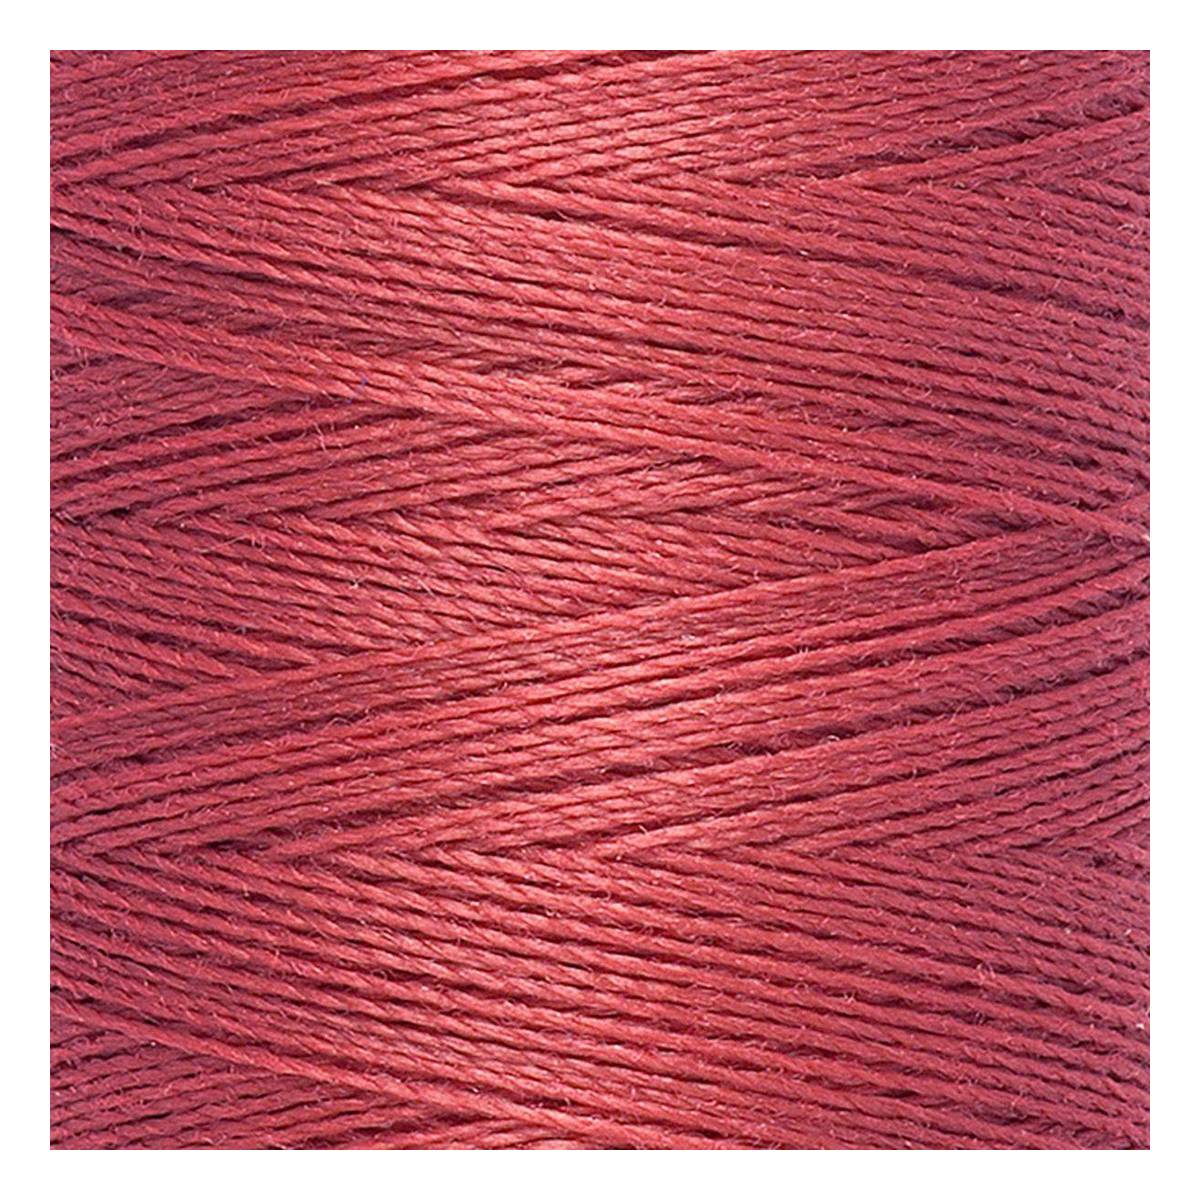 Gutermann Red Sew All Thread 100m (519)